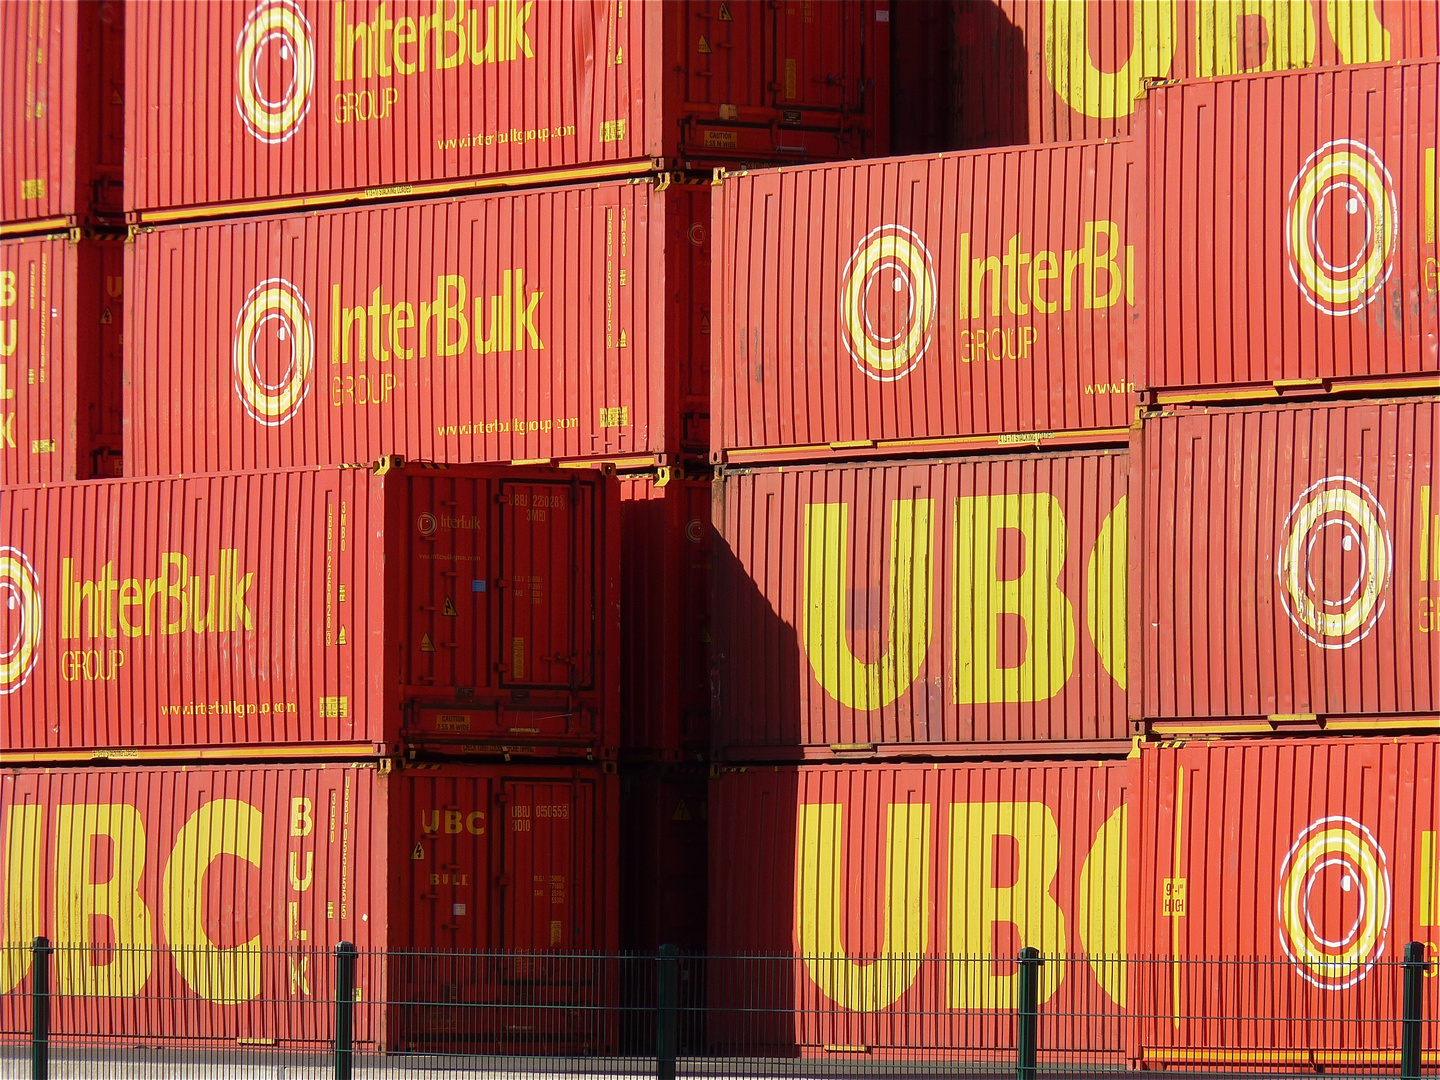 Containerhafen Duisburg